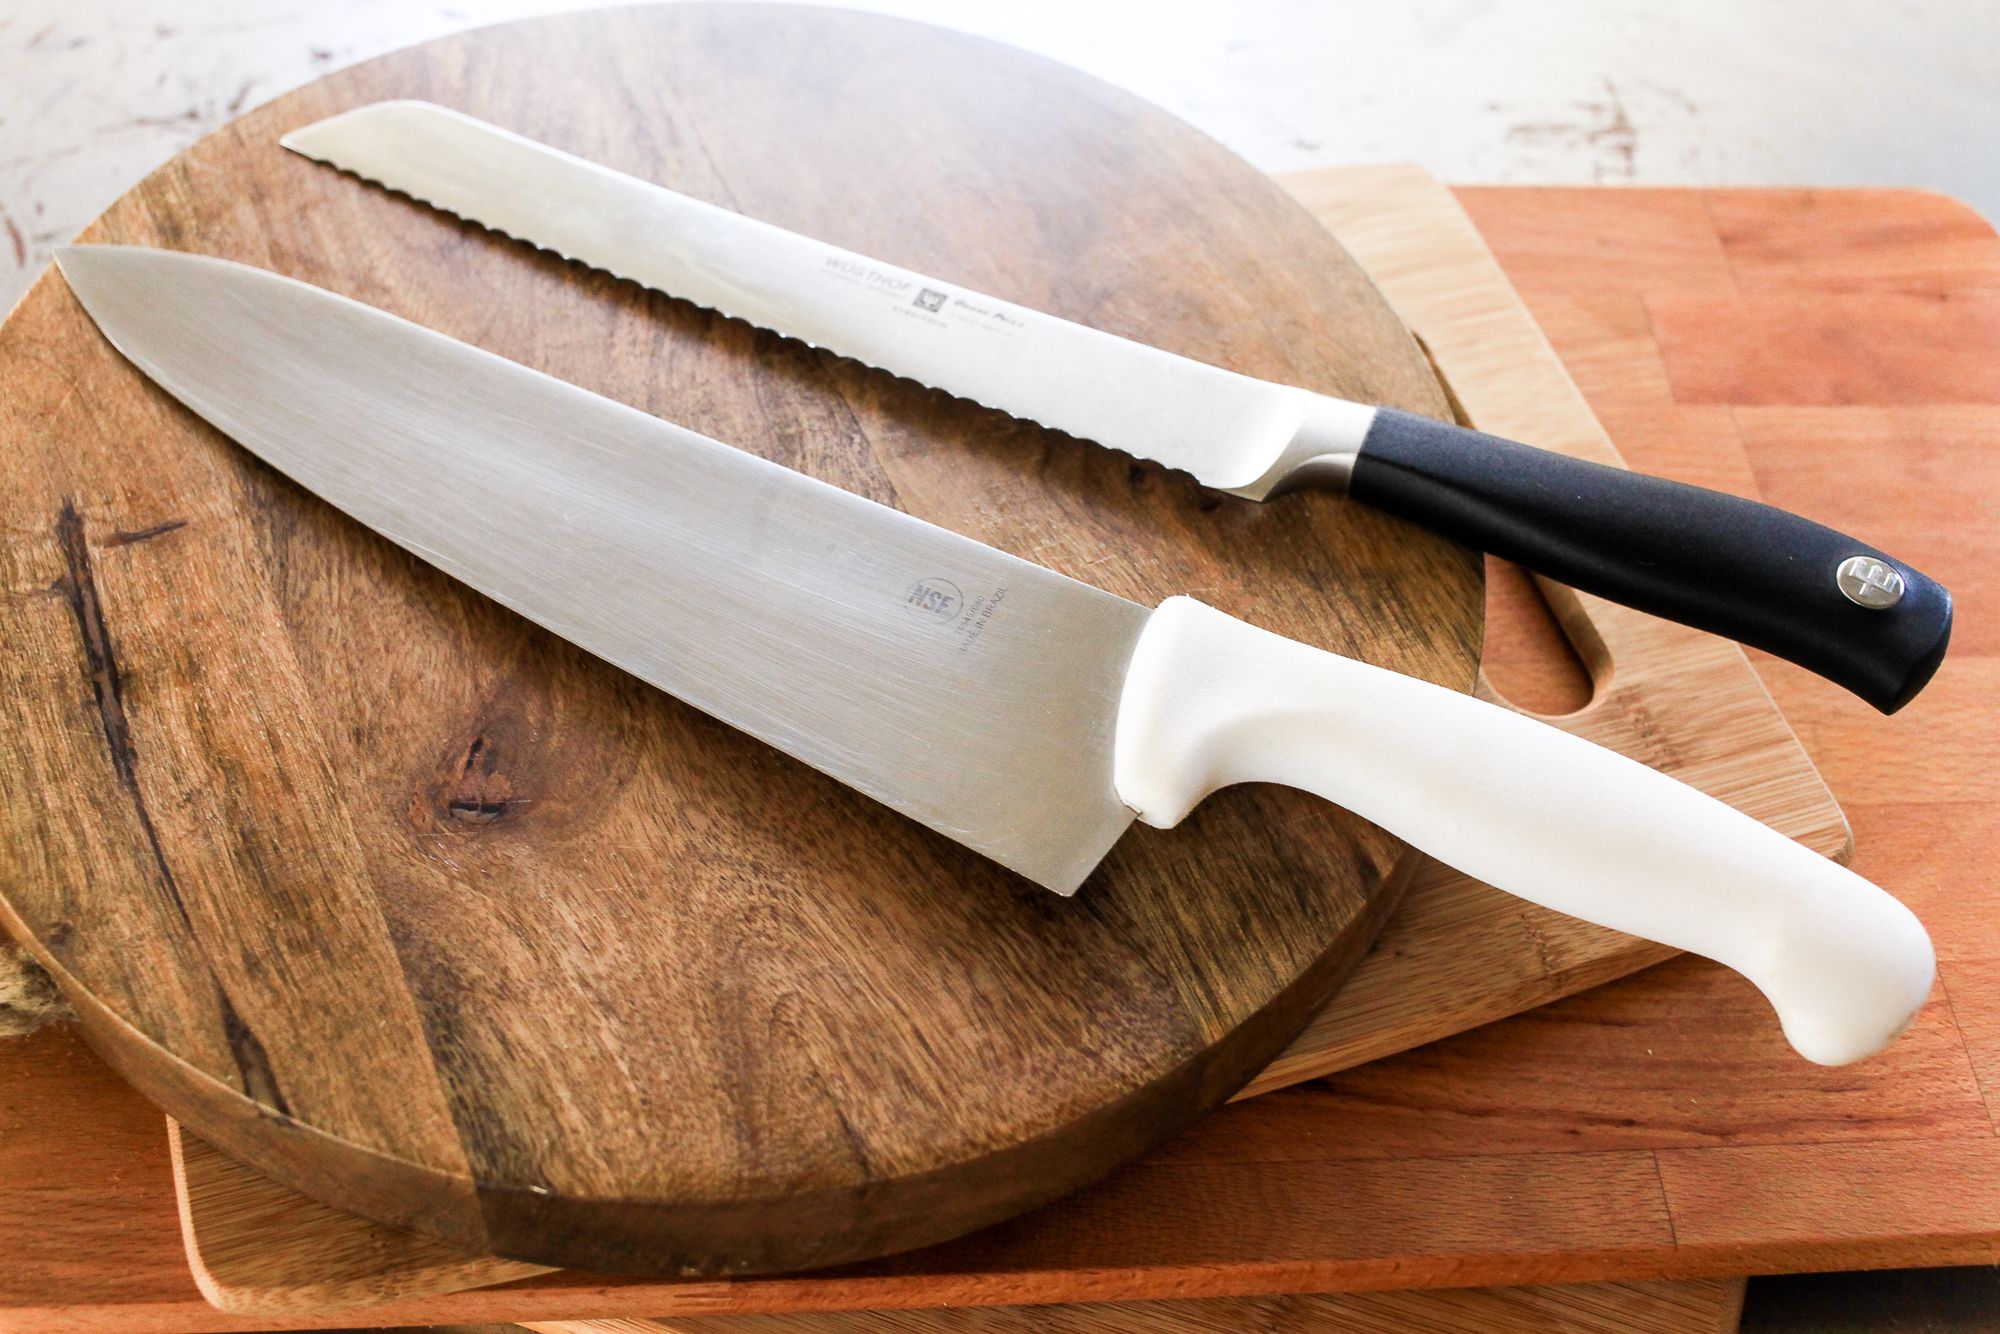 How to use the Sharpens Best Handy Sharp Knife Sharpener (DEMO